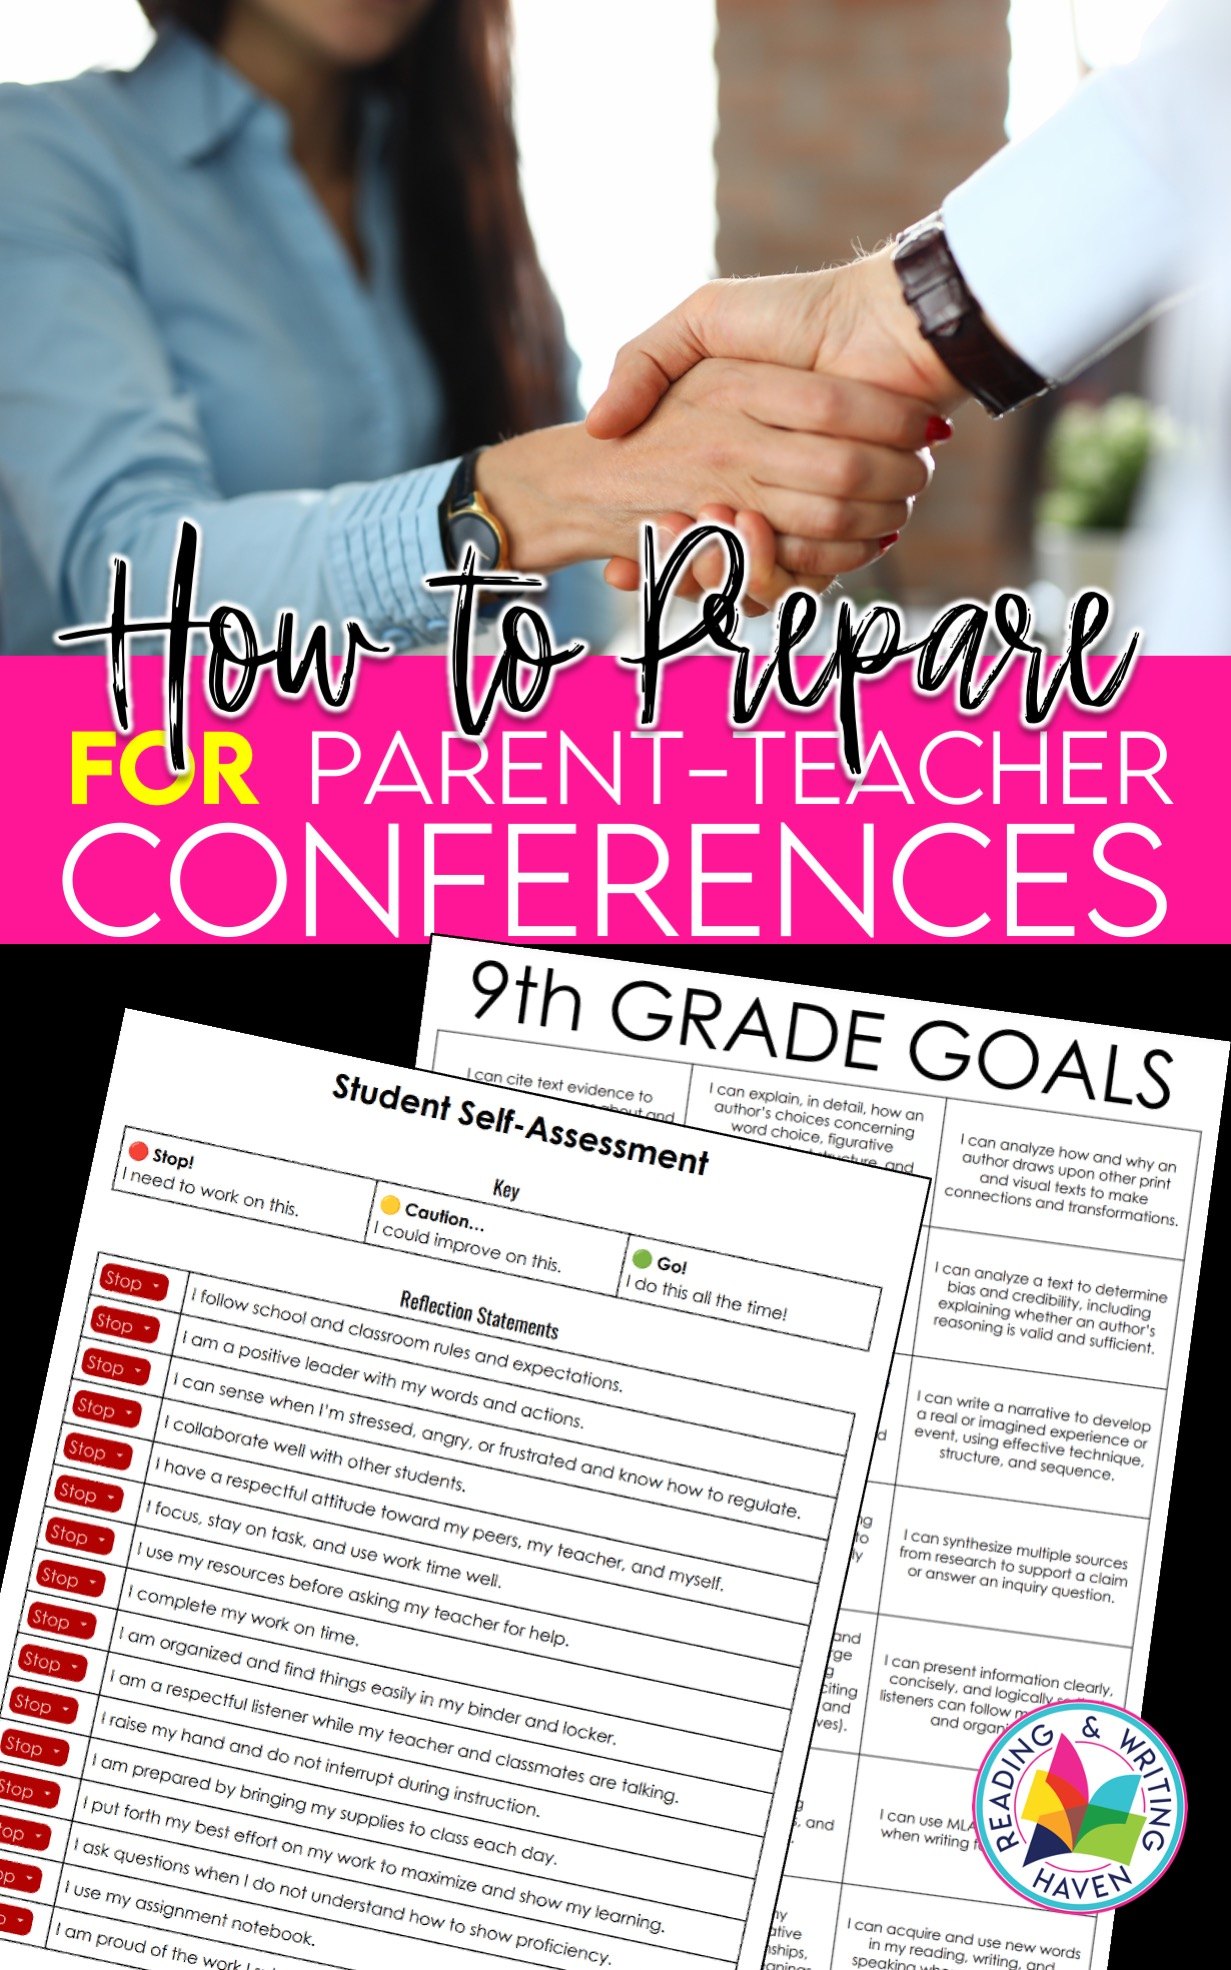 How to prepare for parent-teacher conferences